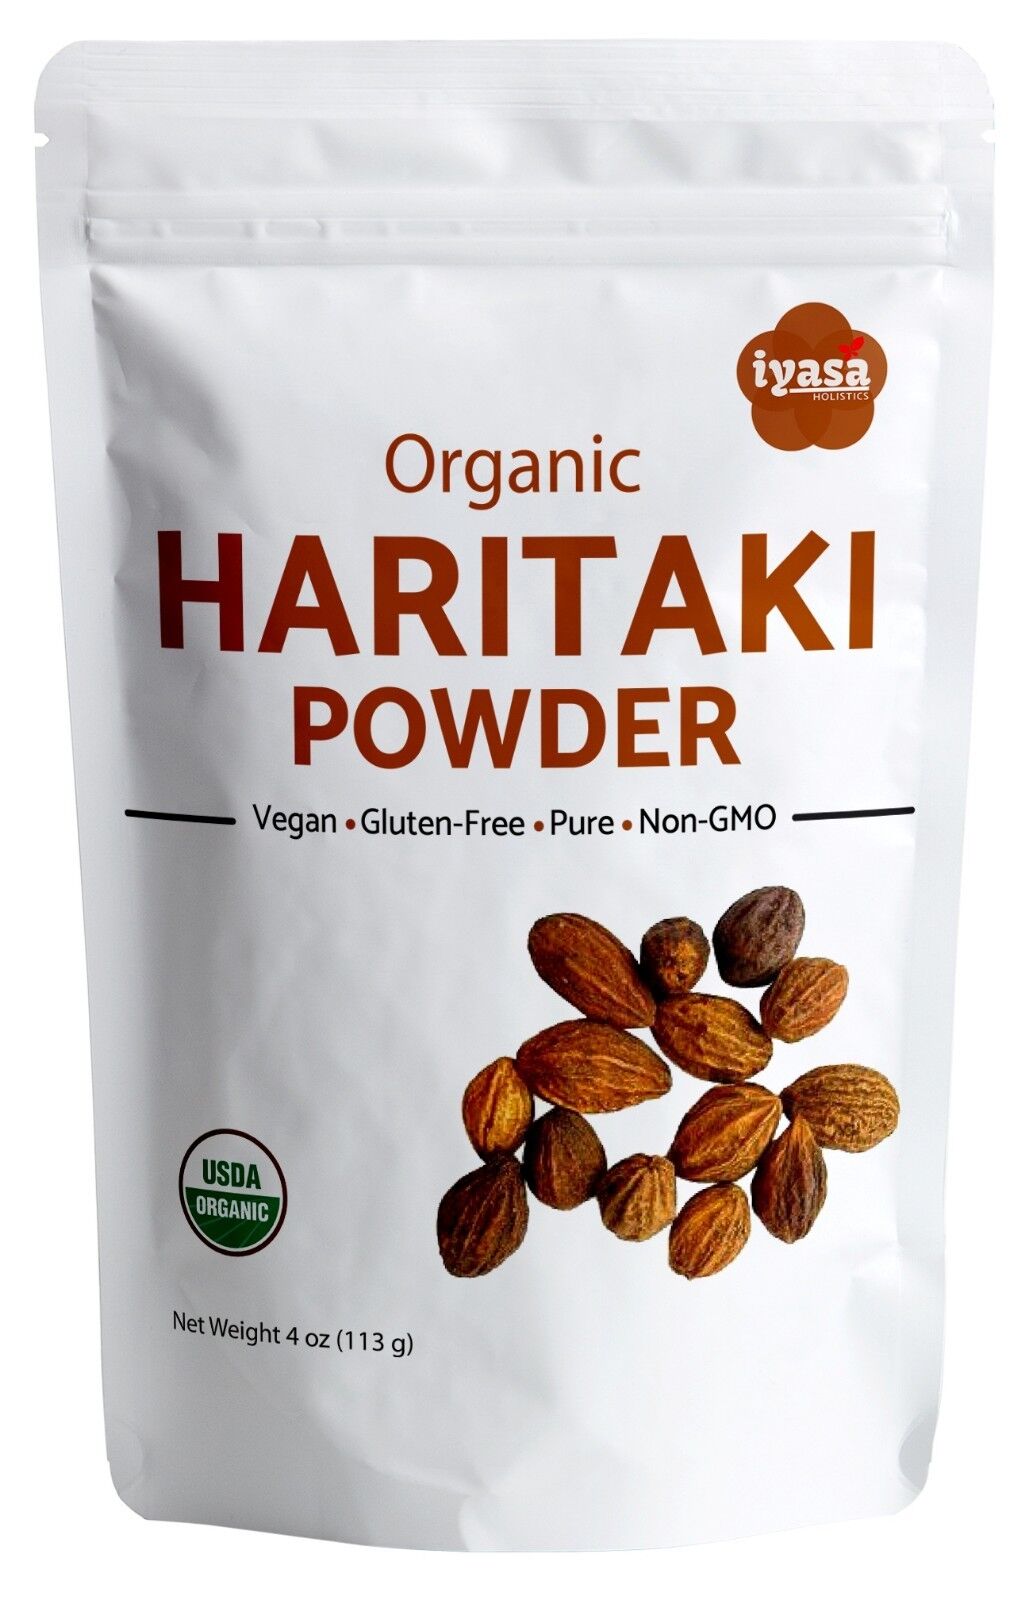 Organic Haritaki Powder | Harde | Harad- Supports Digestion 4,8,16 oz ships free